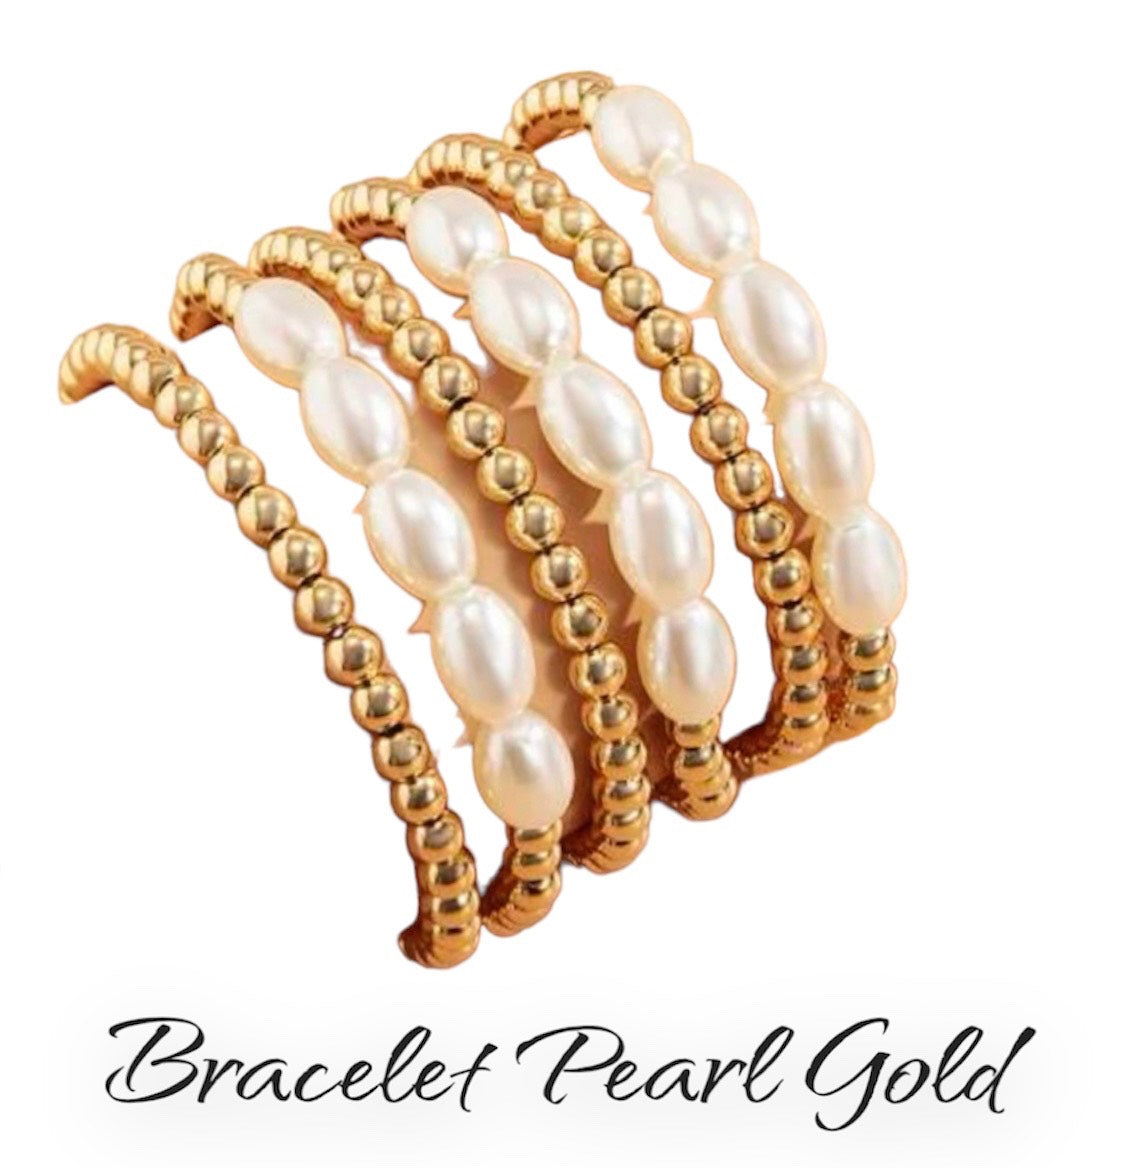 Bracelet Pearl Gold